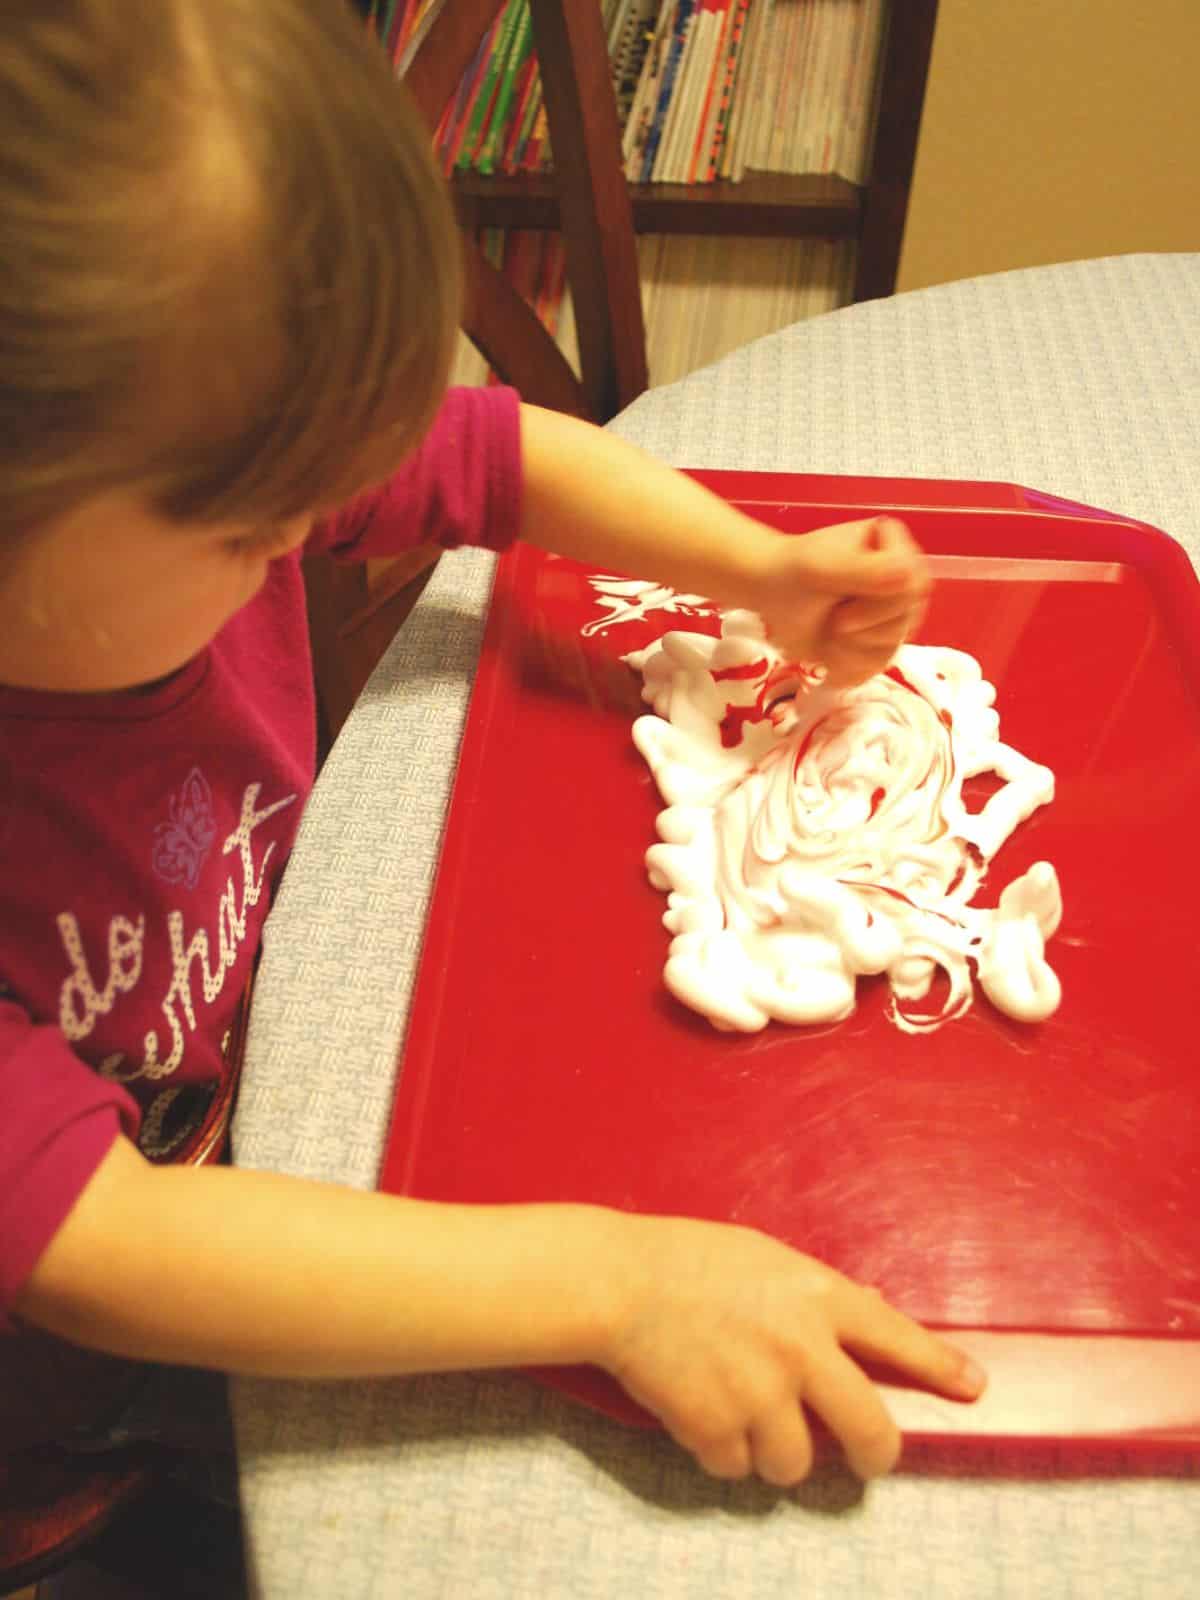 child stirring food coloring into shaving cream